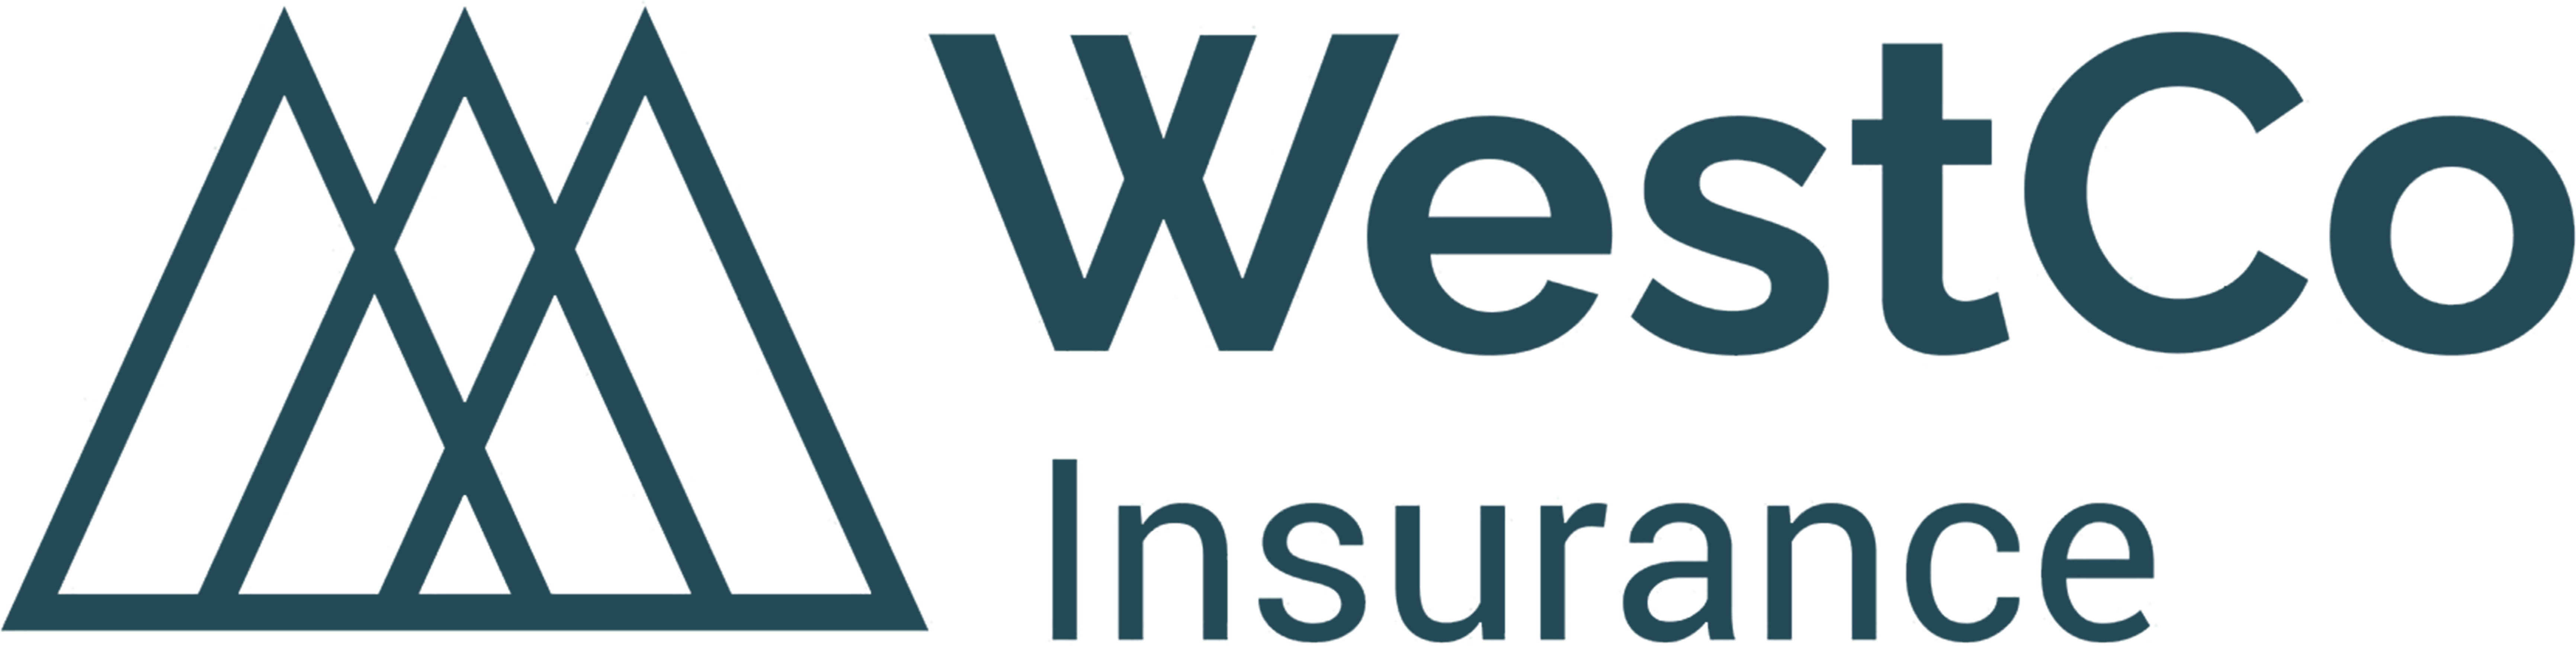 westco-insurance-sm